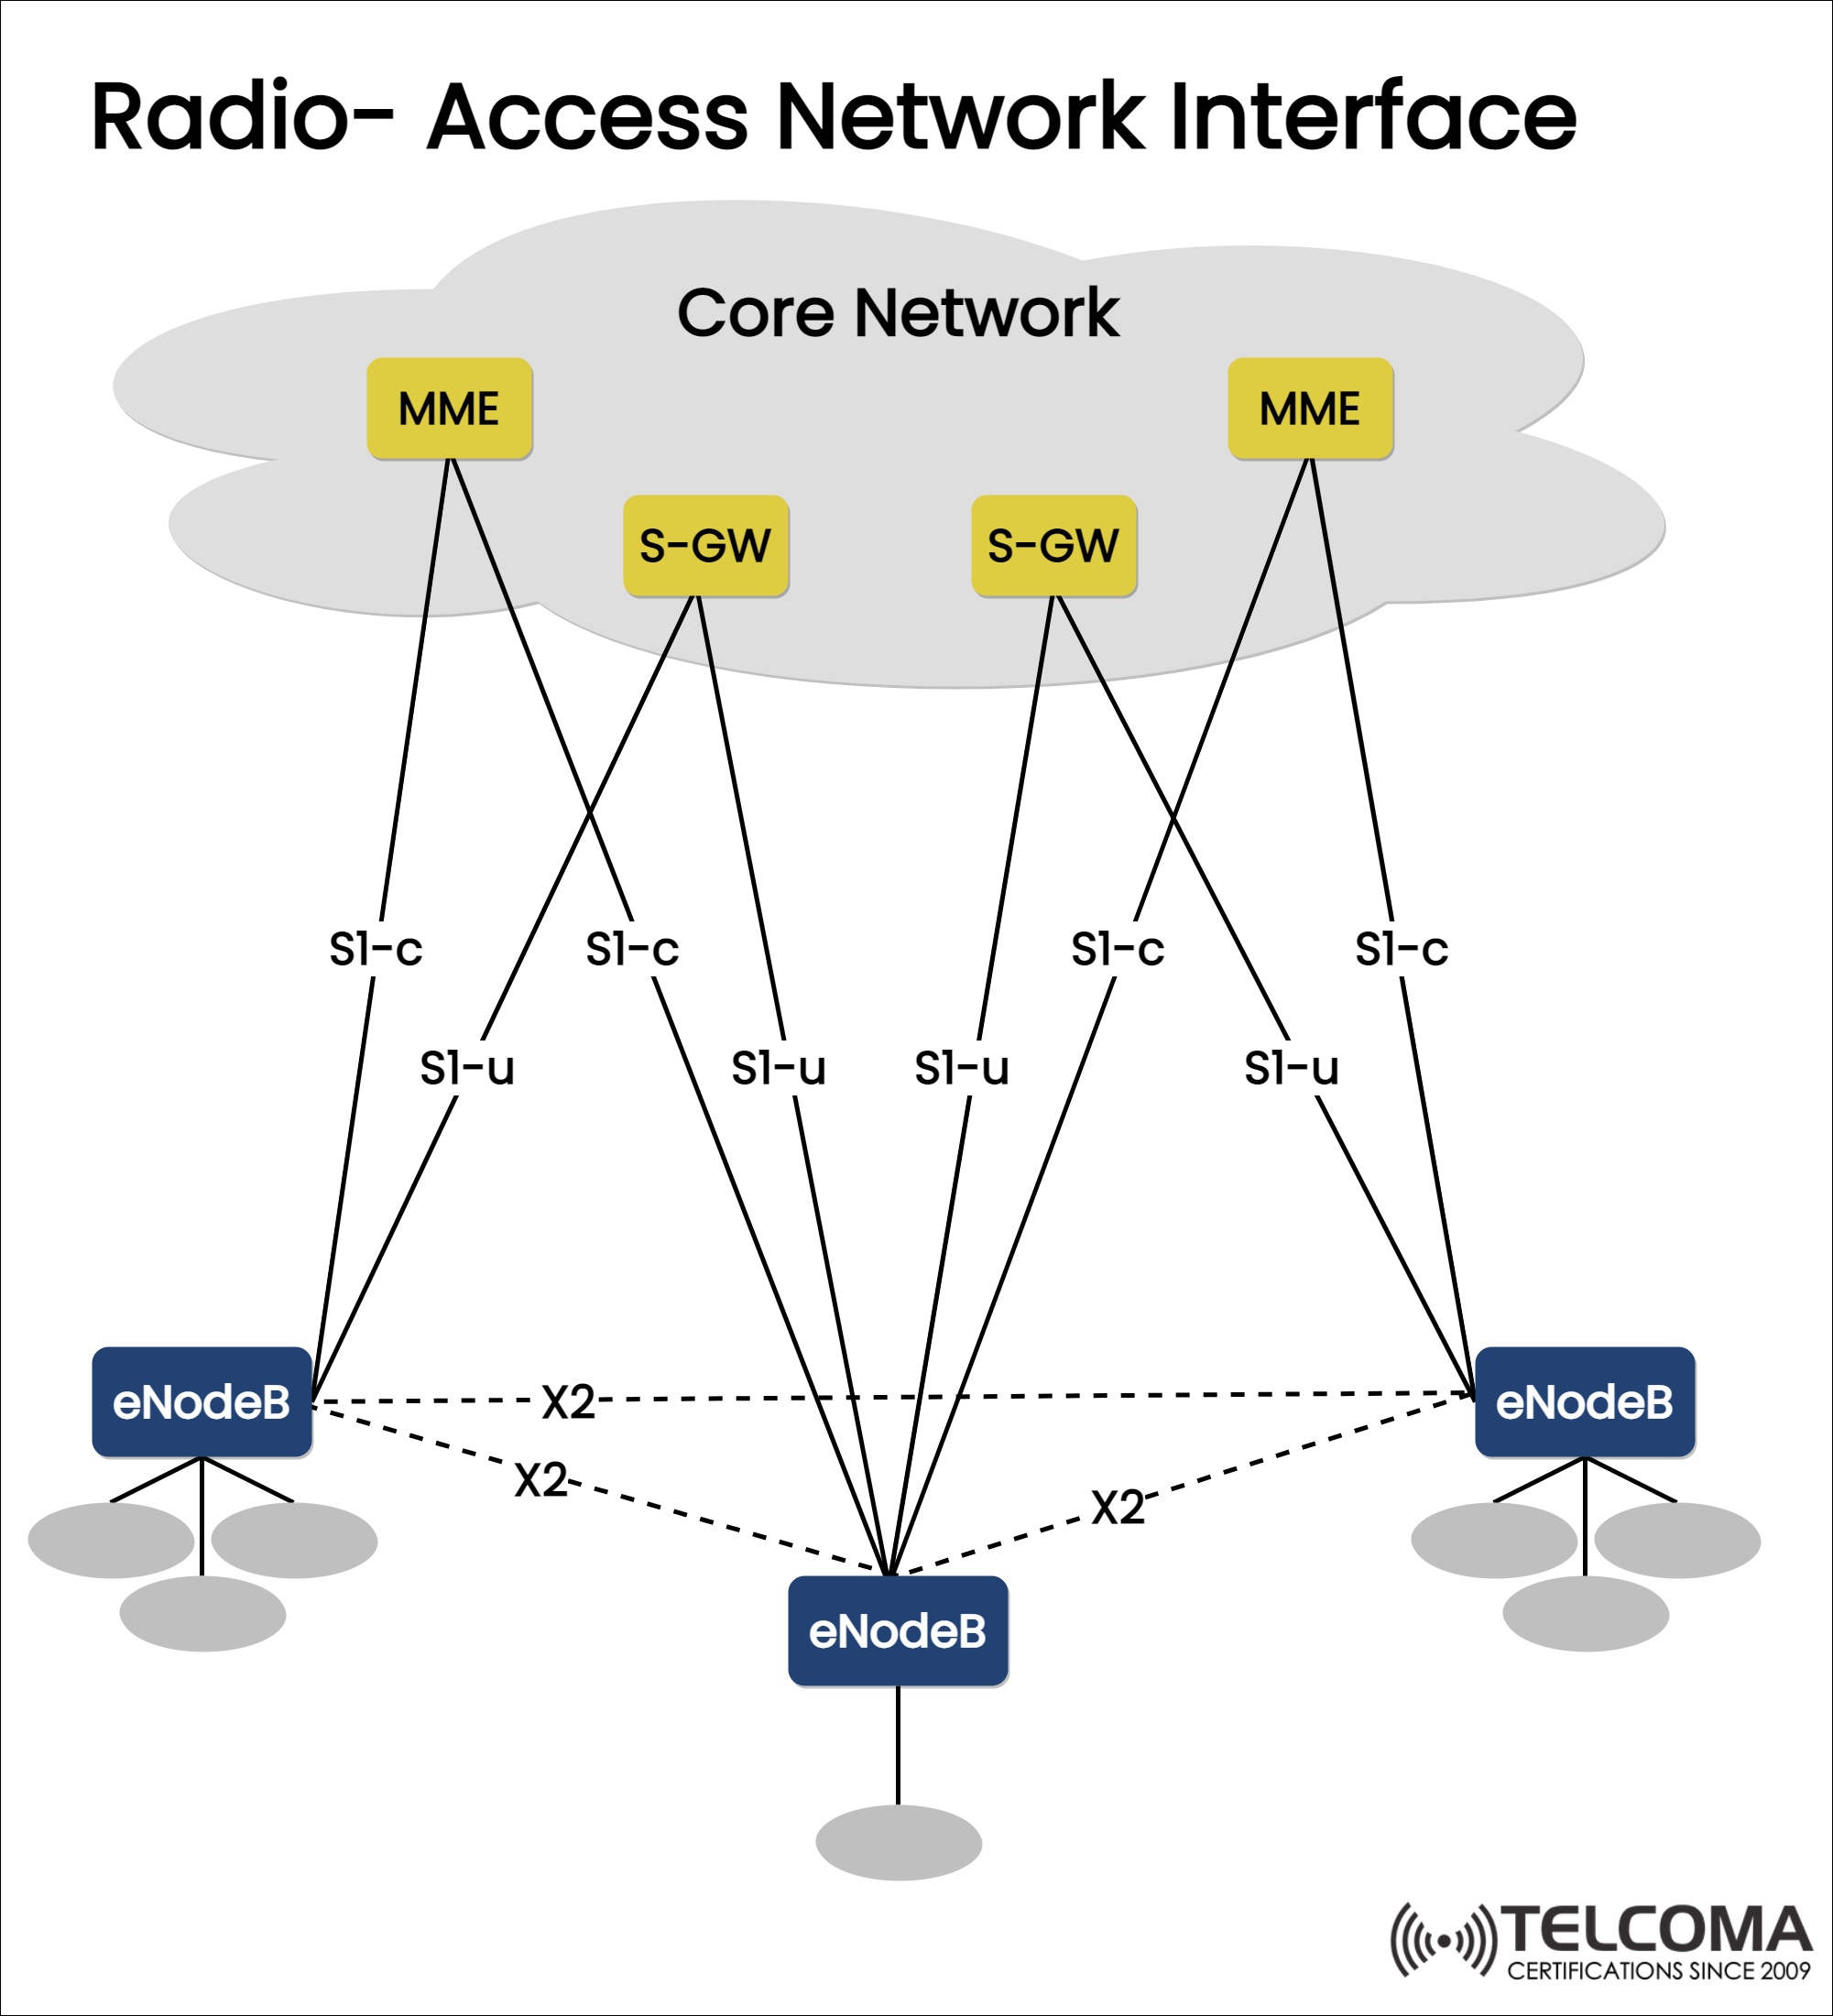 Radio Access interfaces